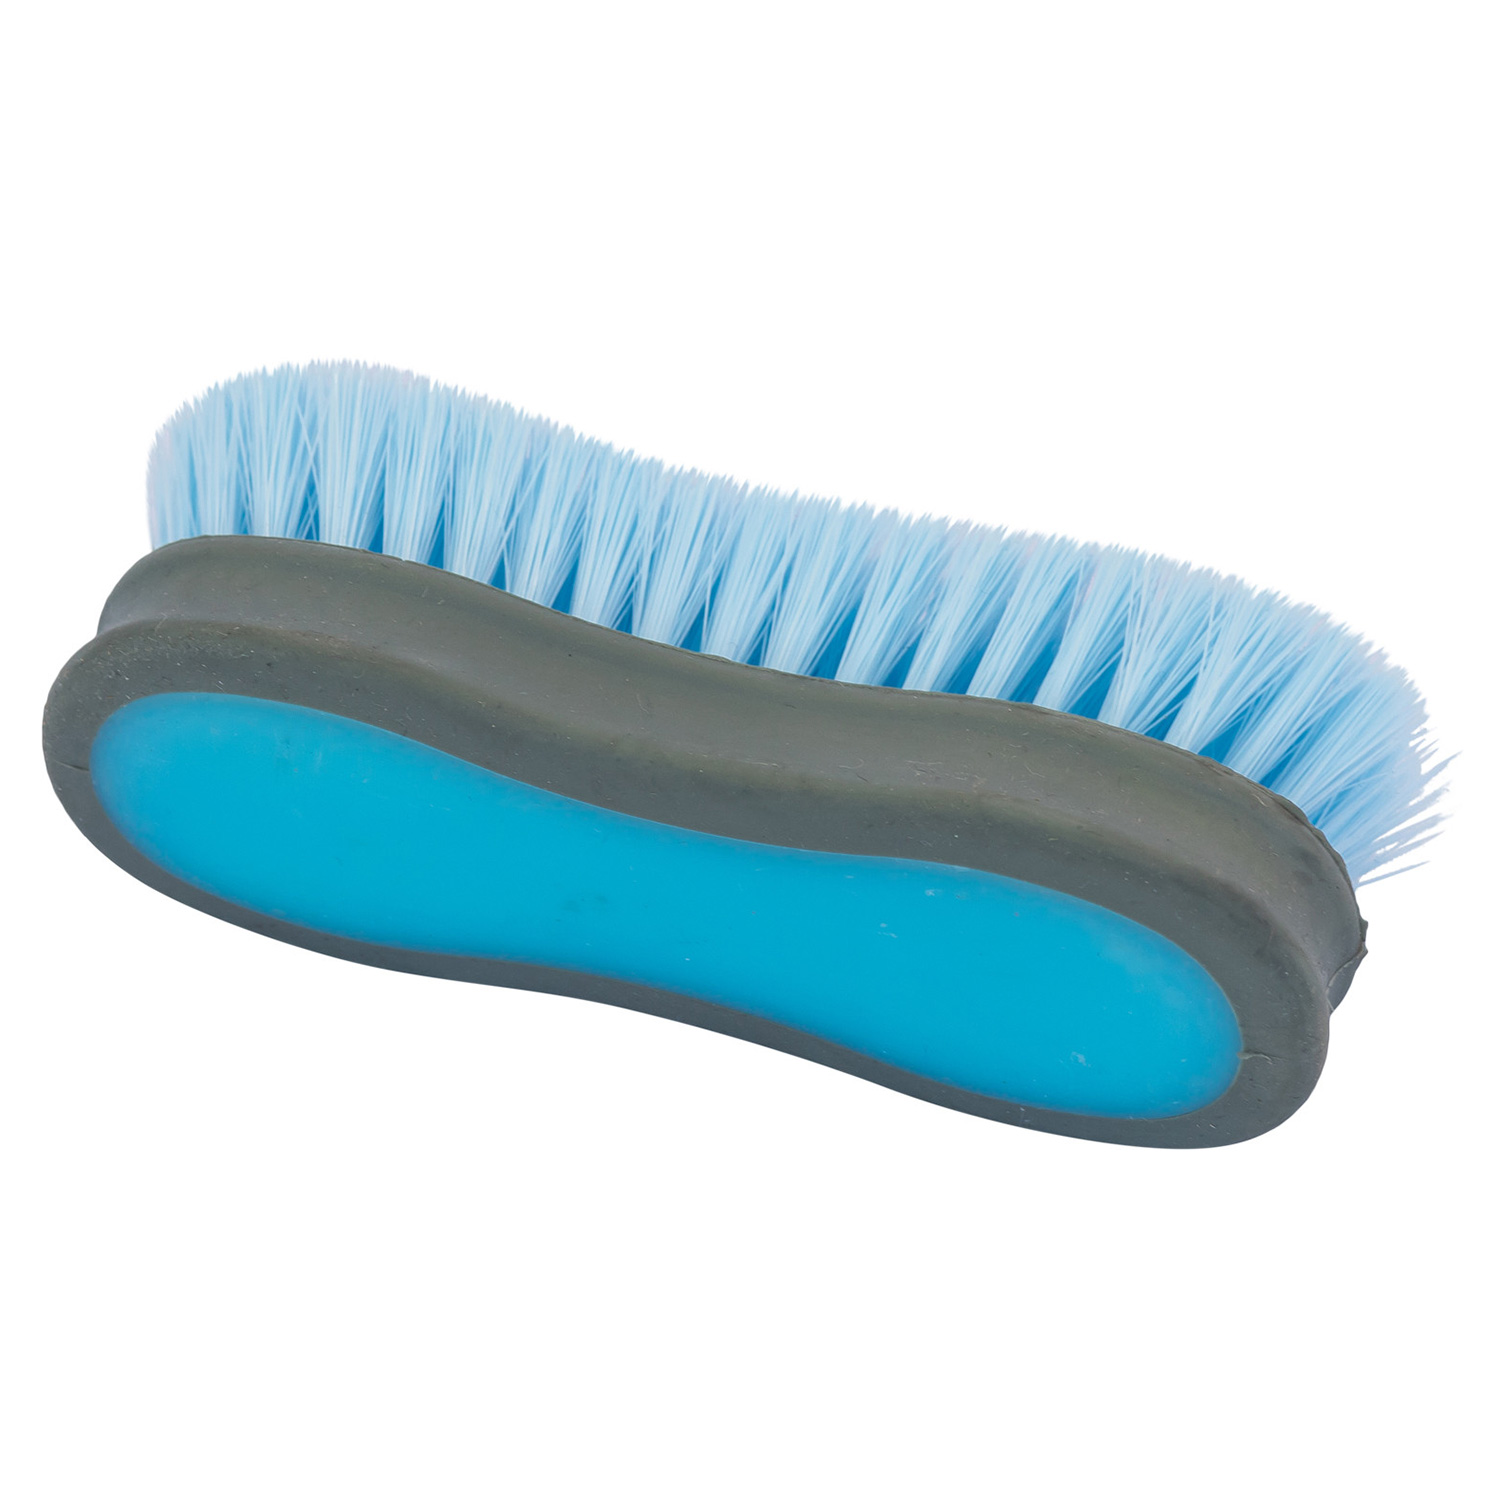 Oster Soft Grooming Brush - Blue